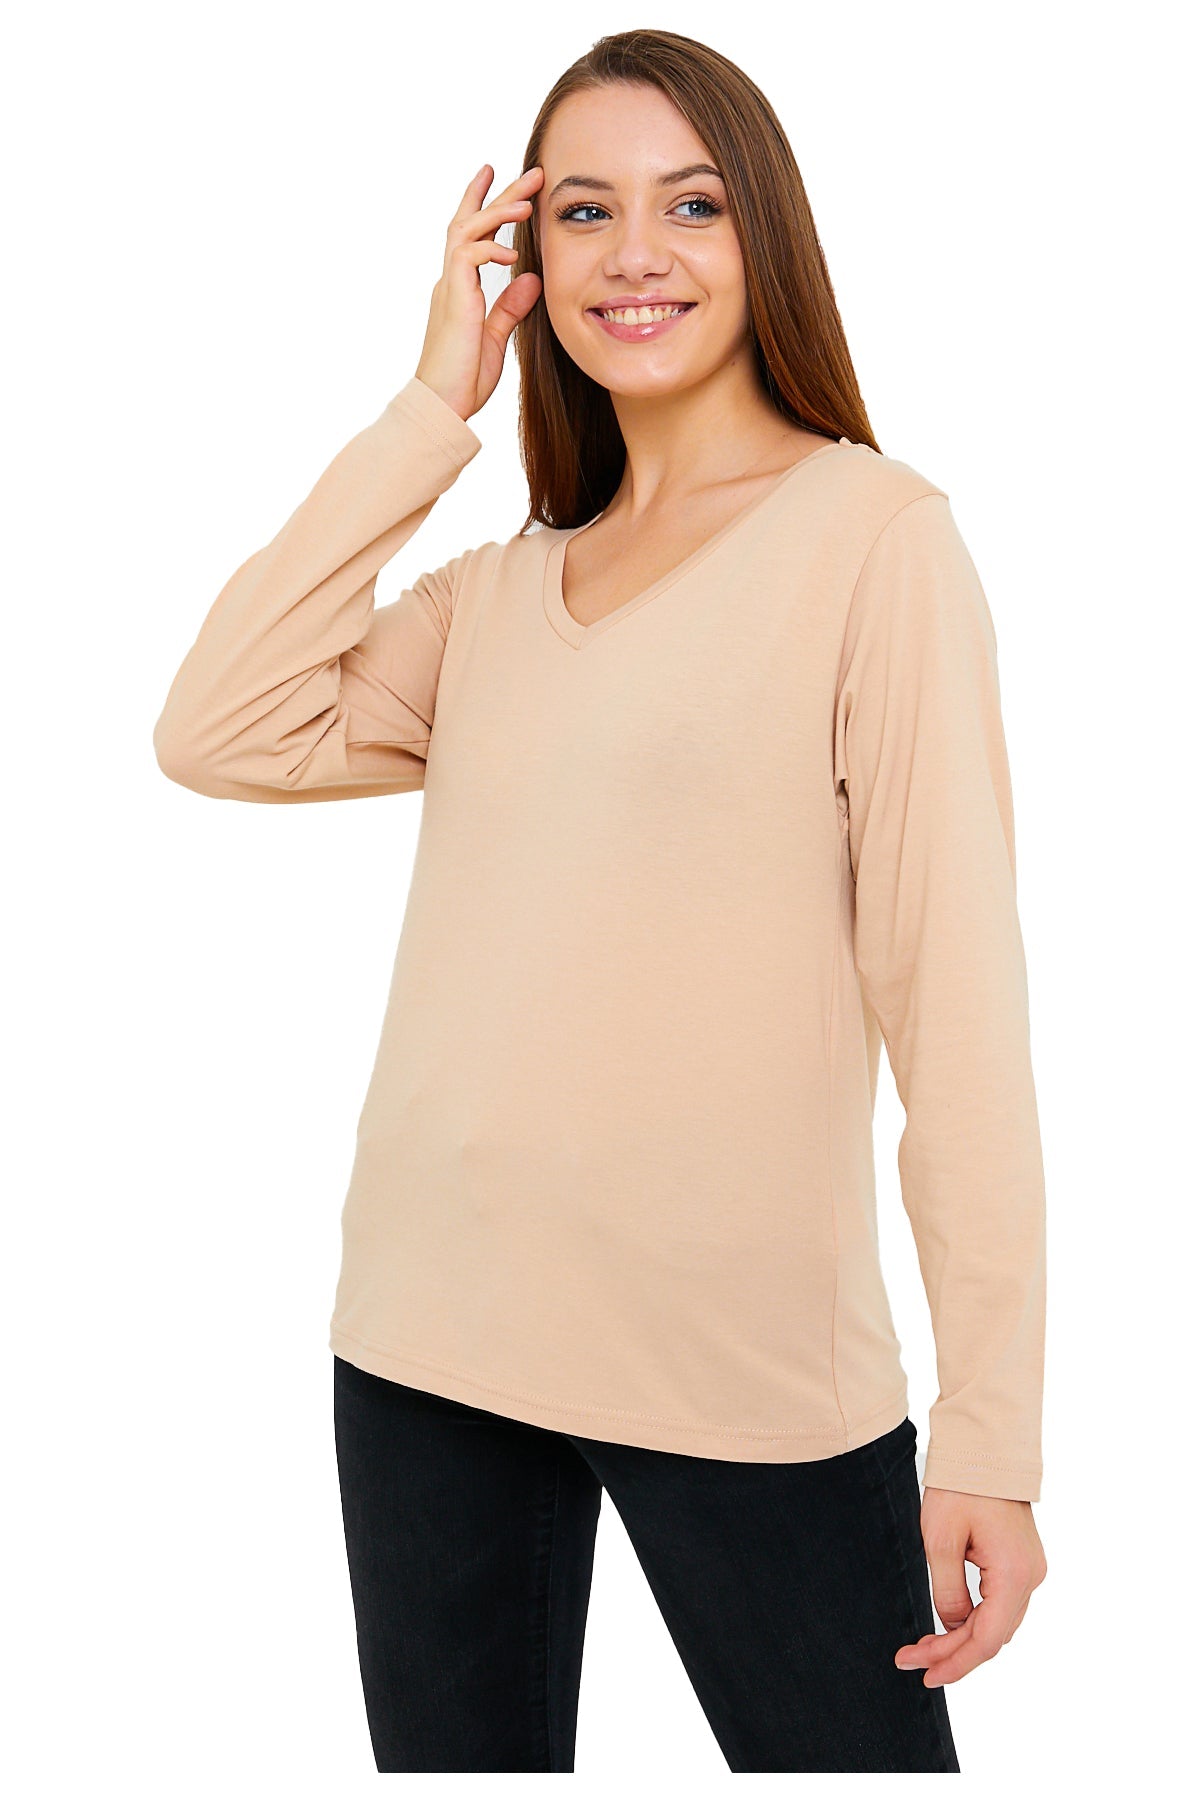 Long Sleeve V-Neck Shirts for Women & Girls - Colorful Pima Cotton-73